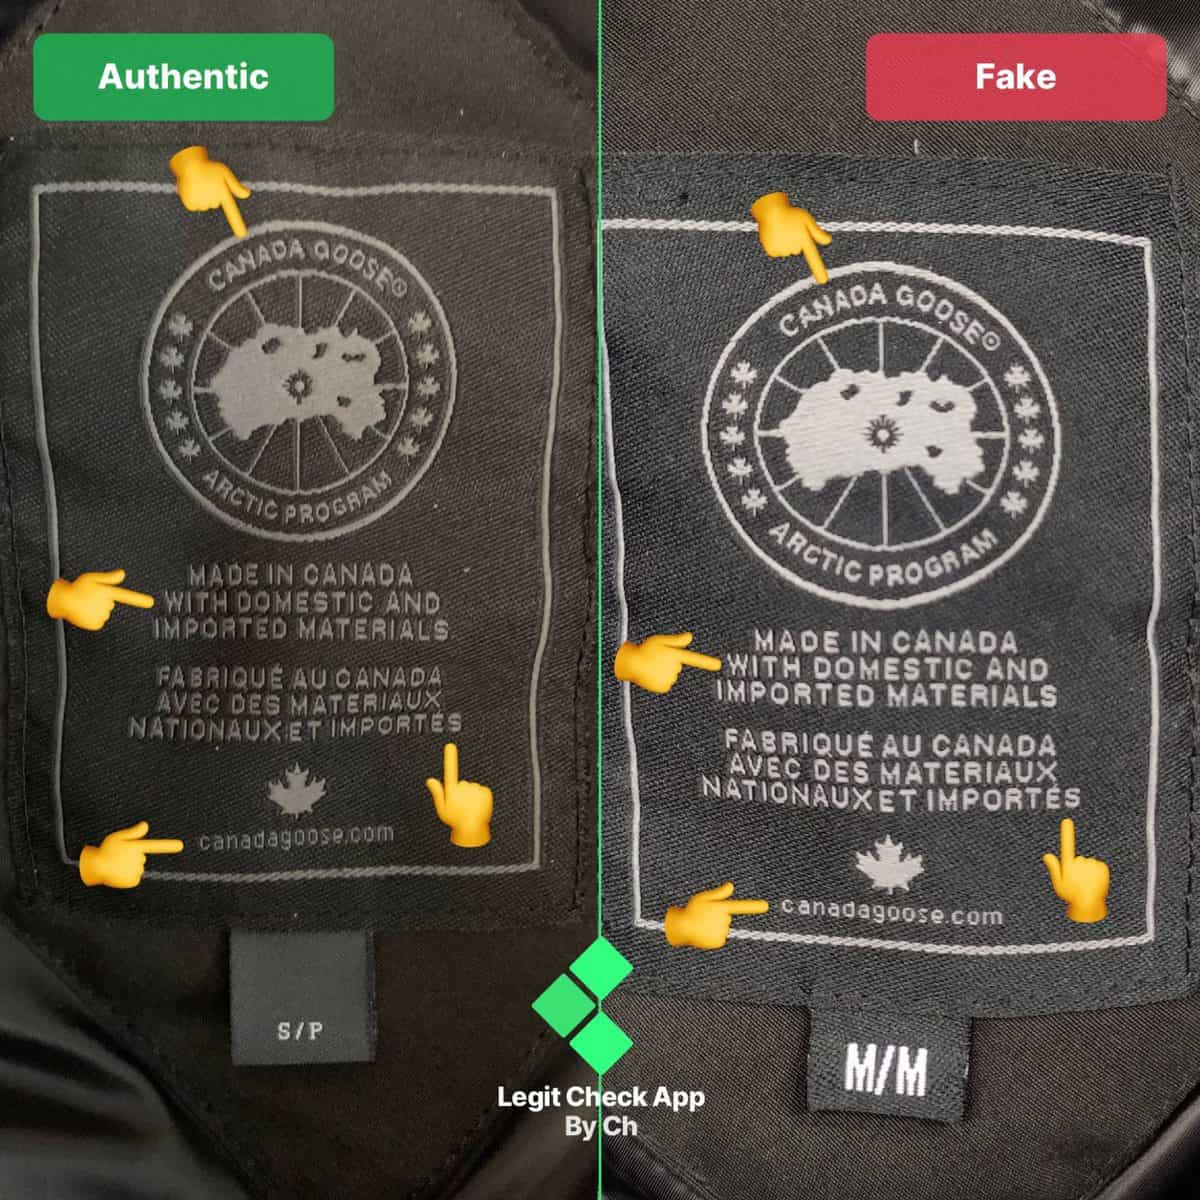 Canada Goose Black Label Authentic Vs Fake Guide